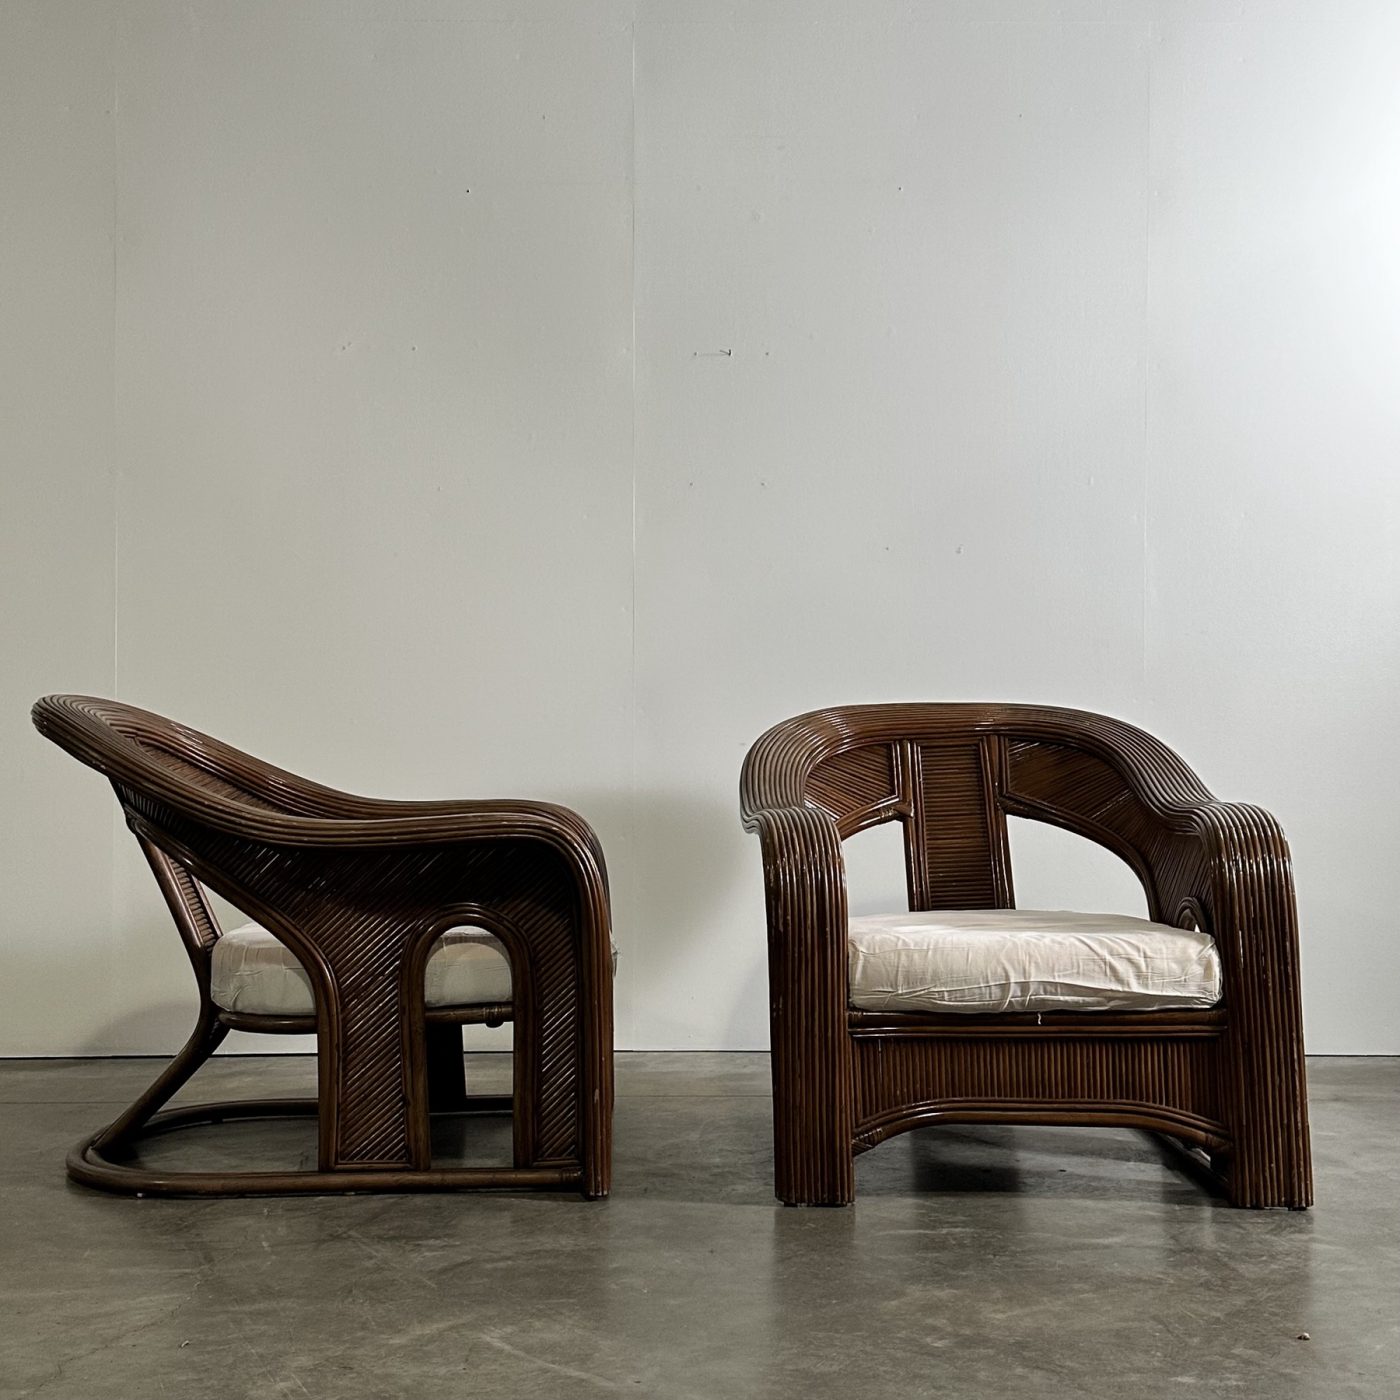 objet-vagabond-rattan-armchairs0010